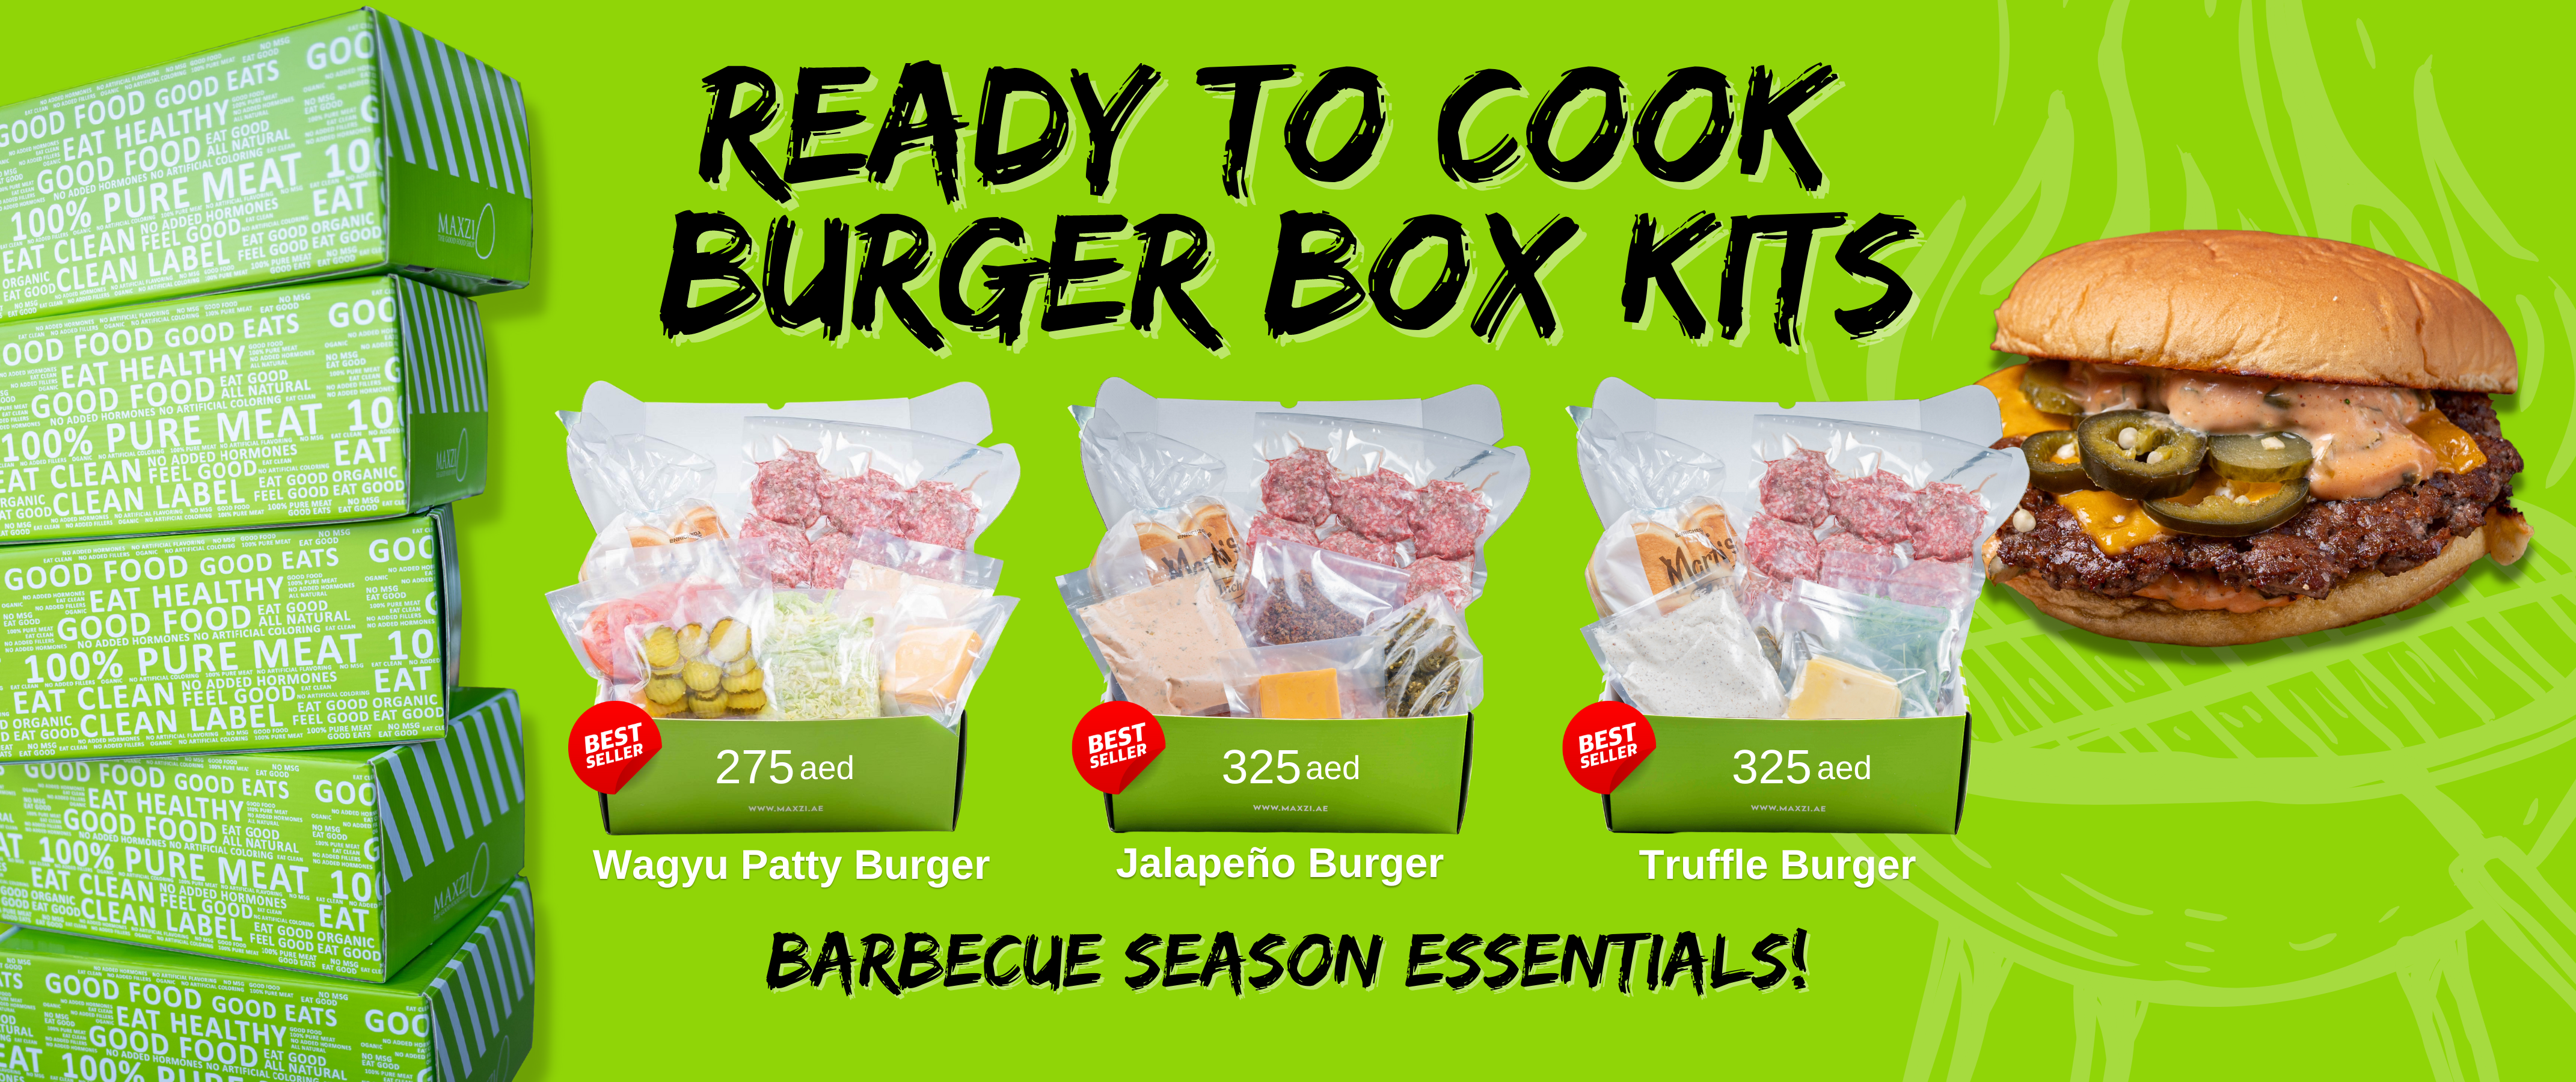 maxzi-burger-box-kits